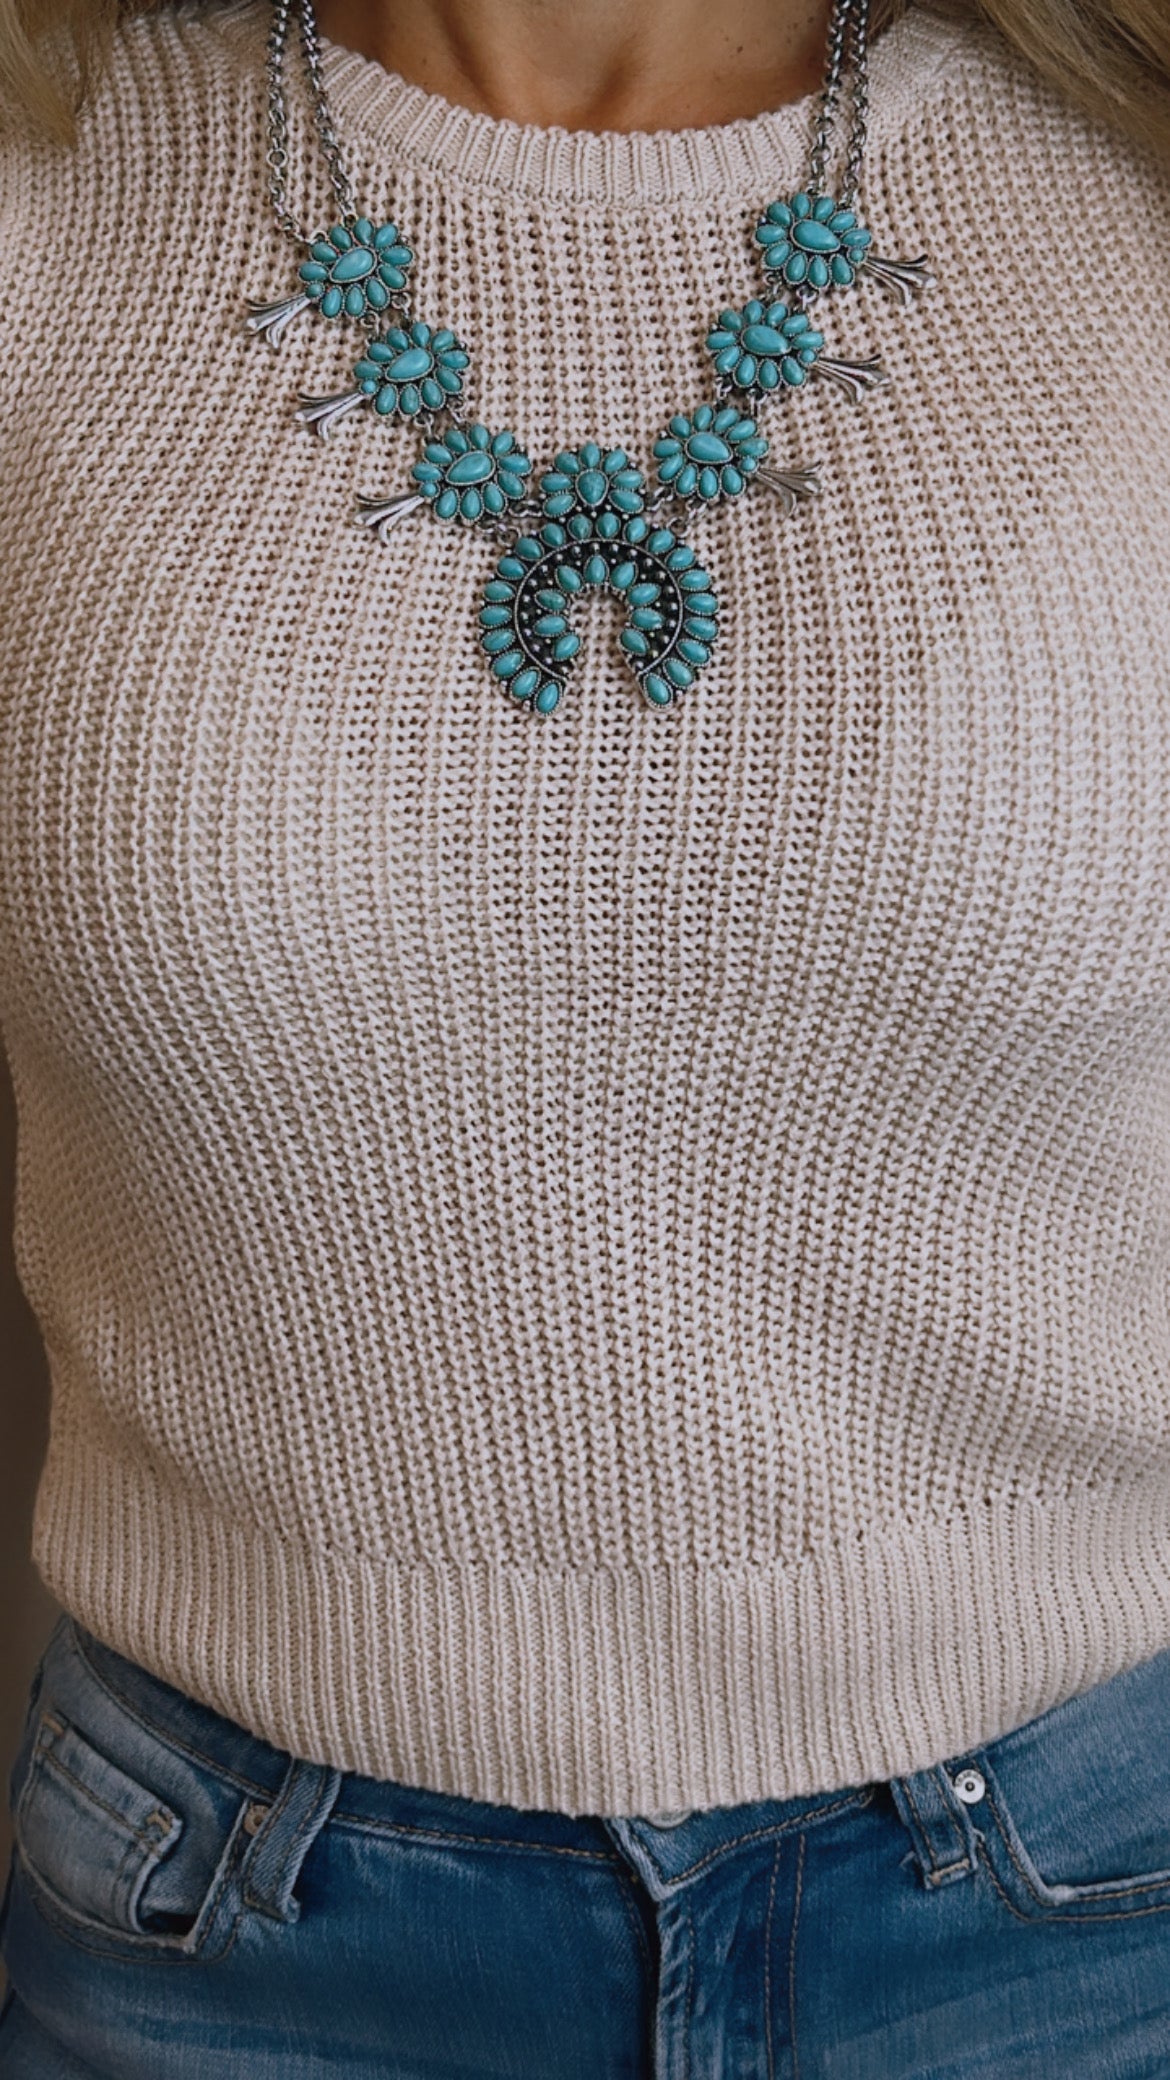 Donna Fashion Squash Blossom Necklace